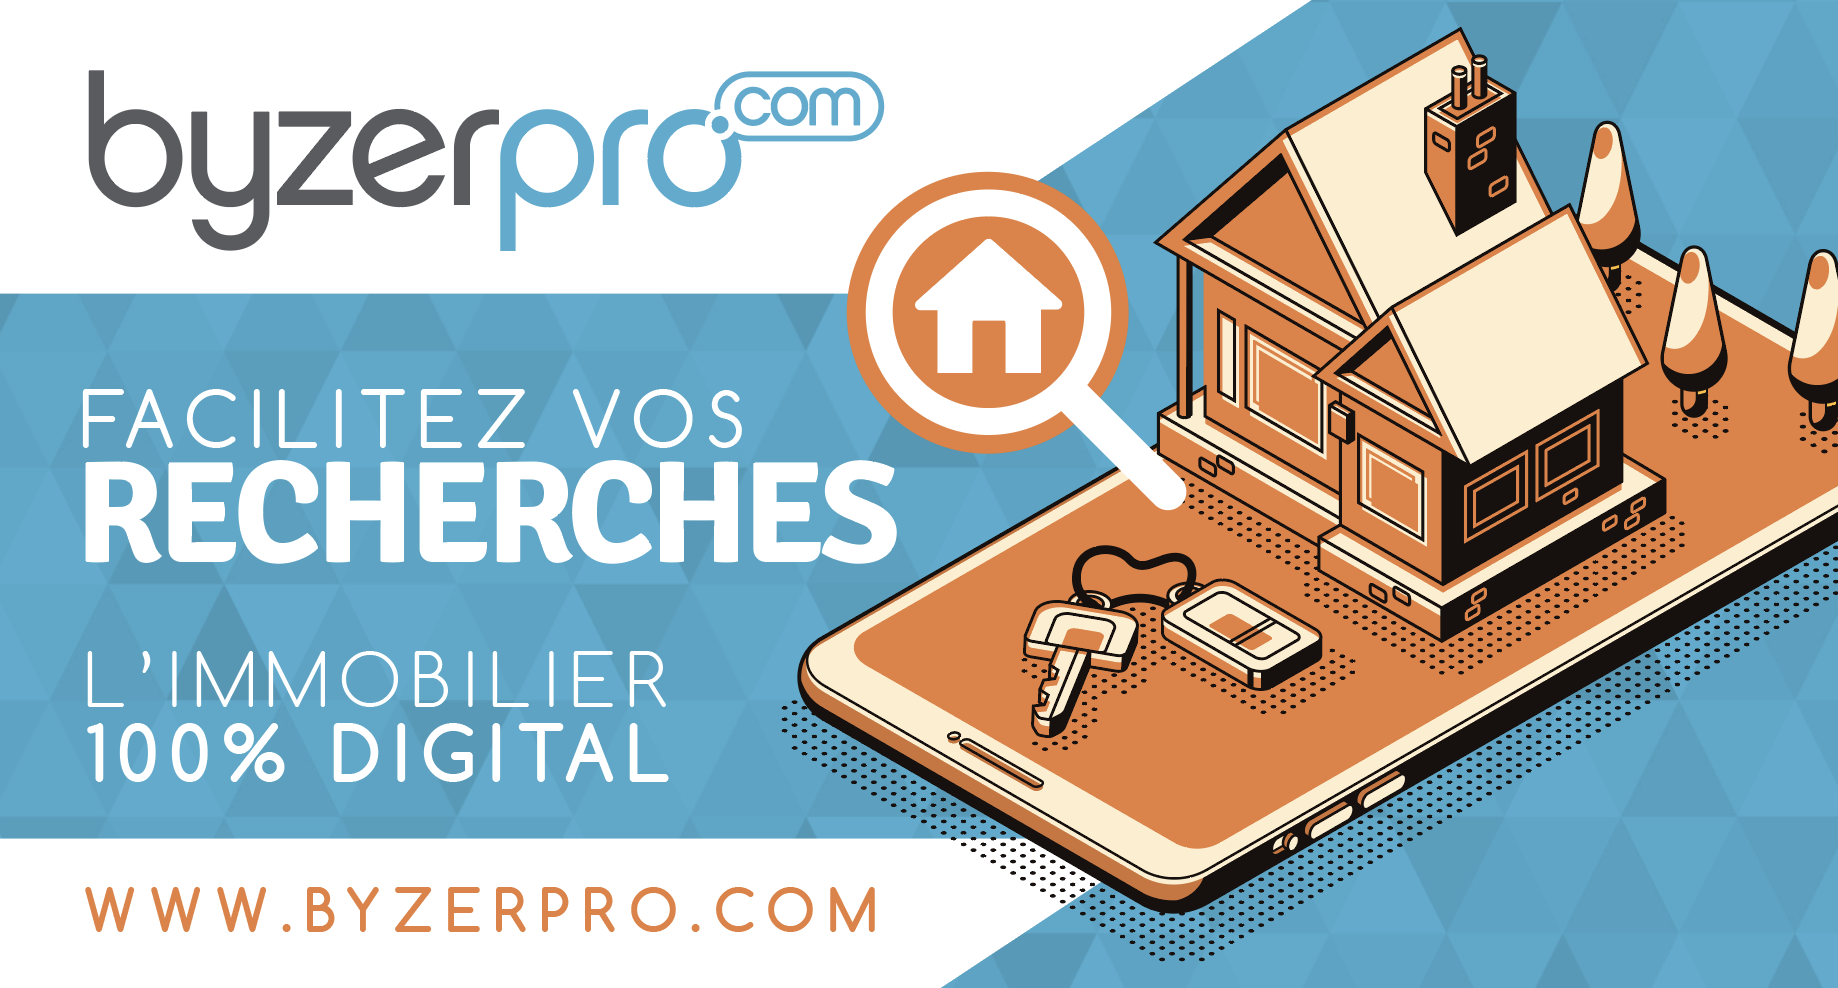 Immobilier digital Byzerpro.com